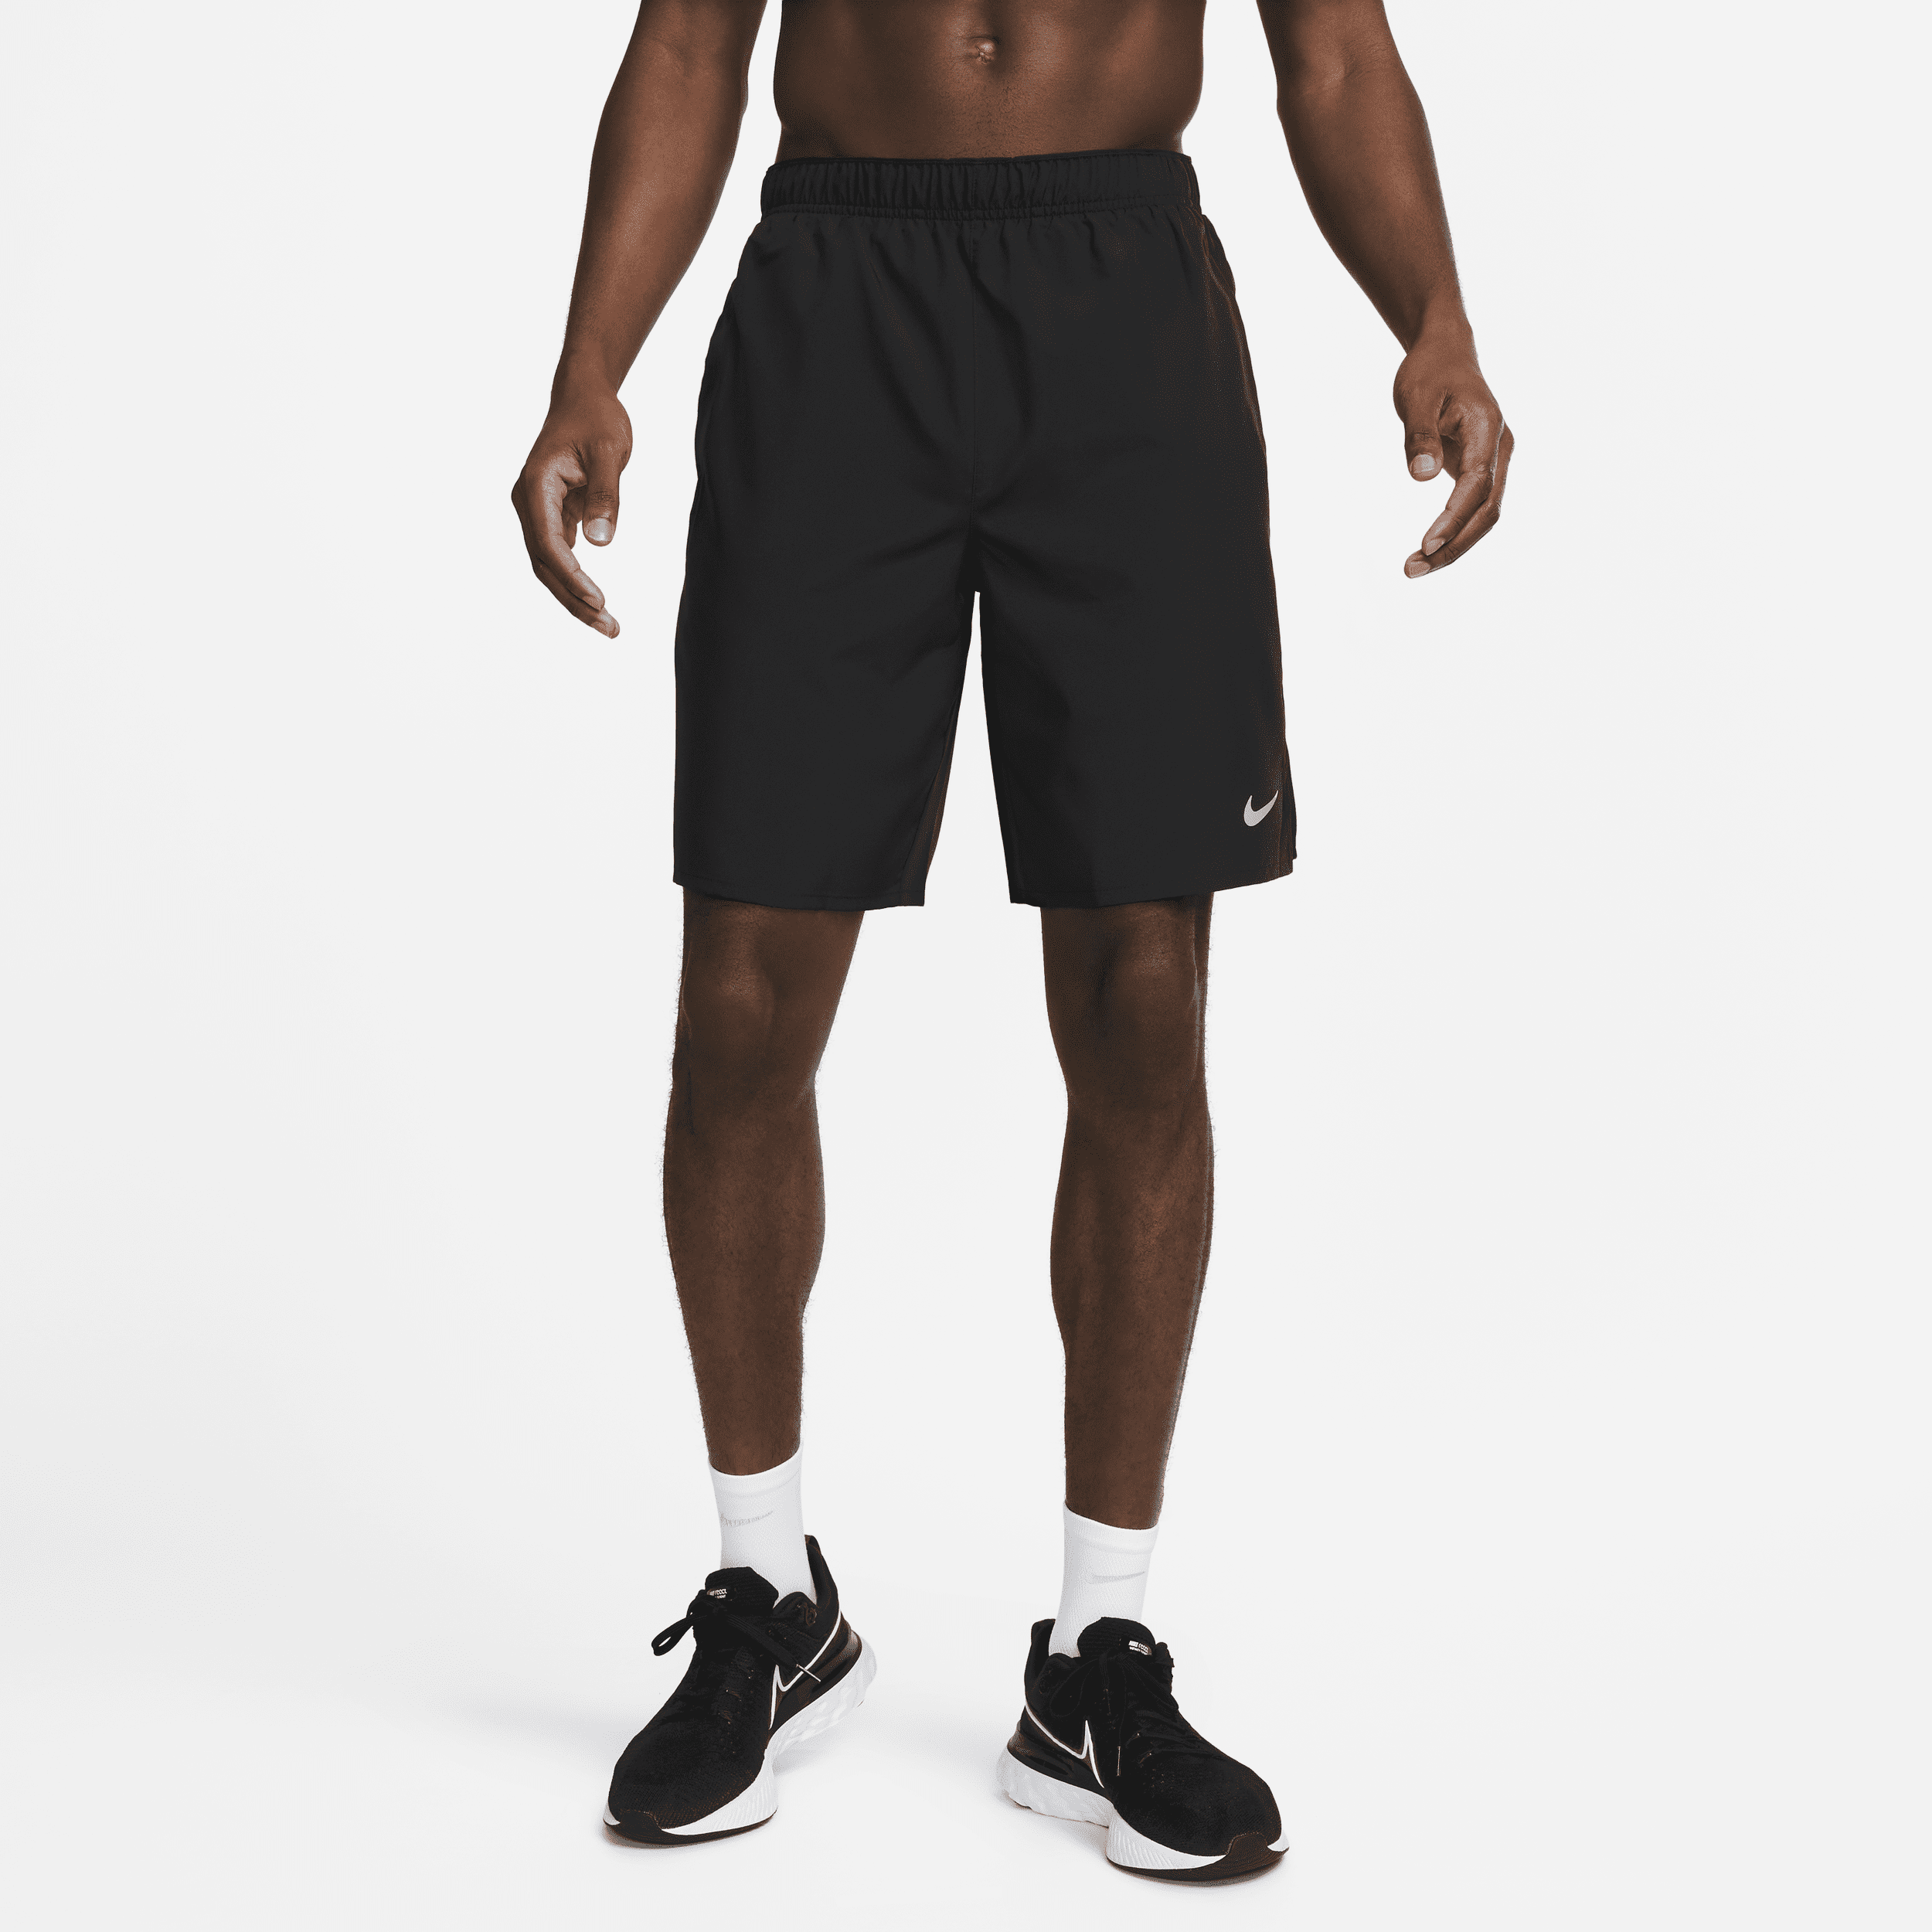 Shorts versatili non foderati Dri-FIT 23 cm Nike Challenger – Uomo - Nero